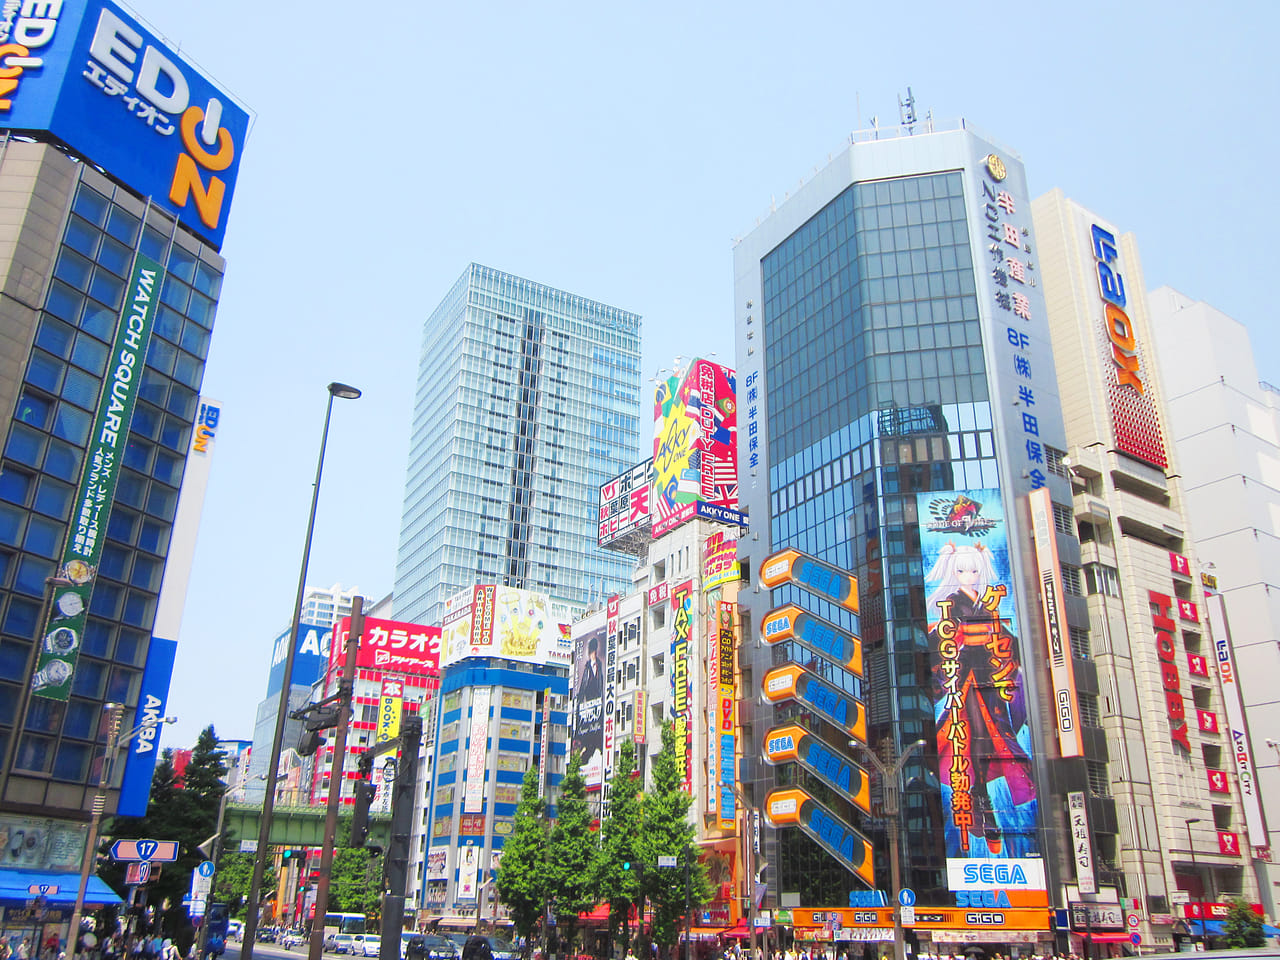 Why Akihabara and Ikebukuro Are Such Popular Anime Locations